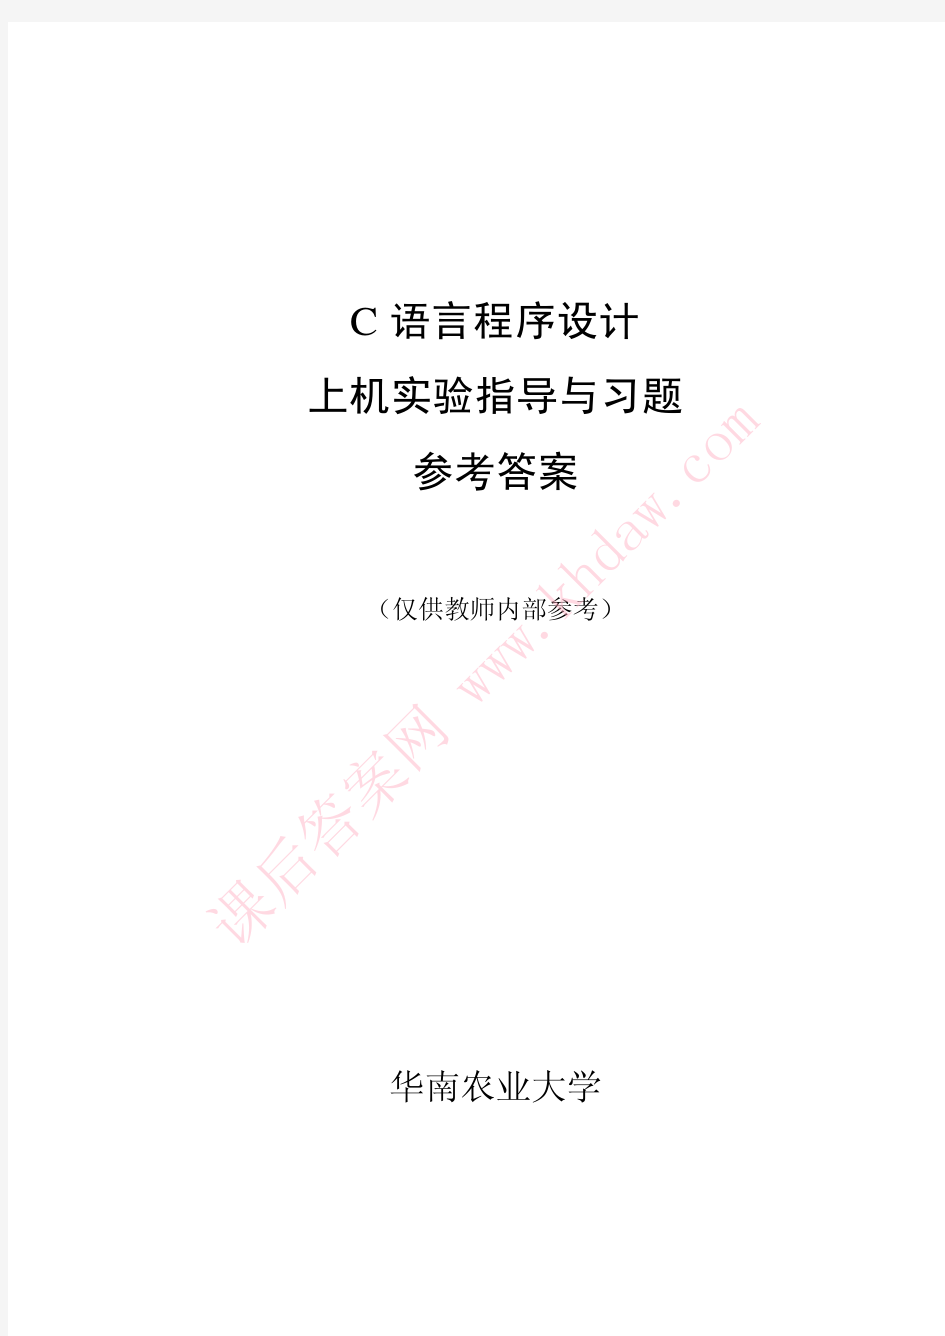 C语言程序设计 上机实验指导与习题 第三版 (陈湘骥 编著 著) 华南农业大学 参考答案